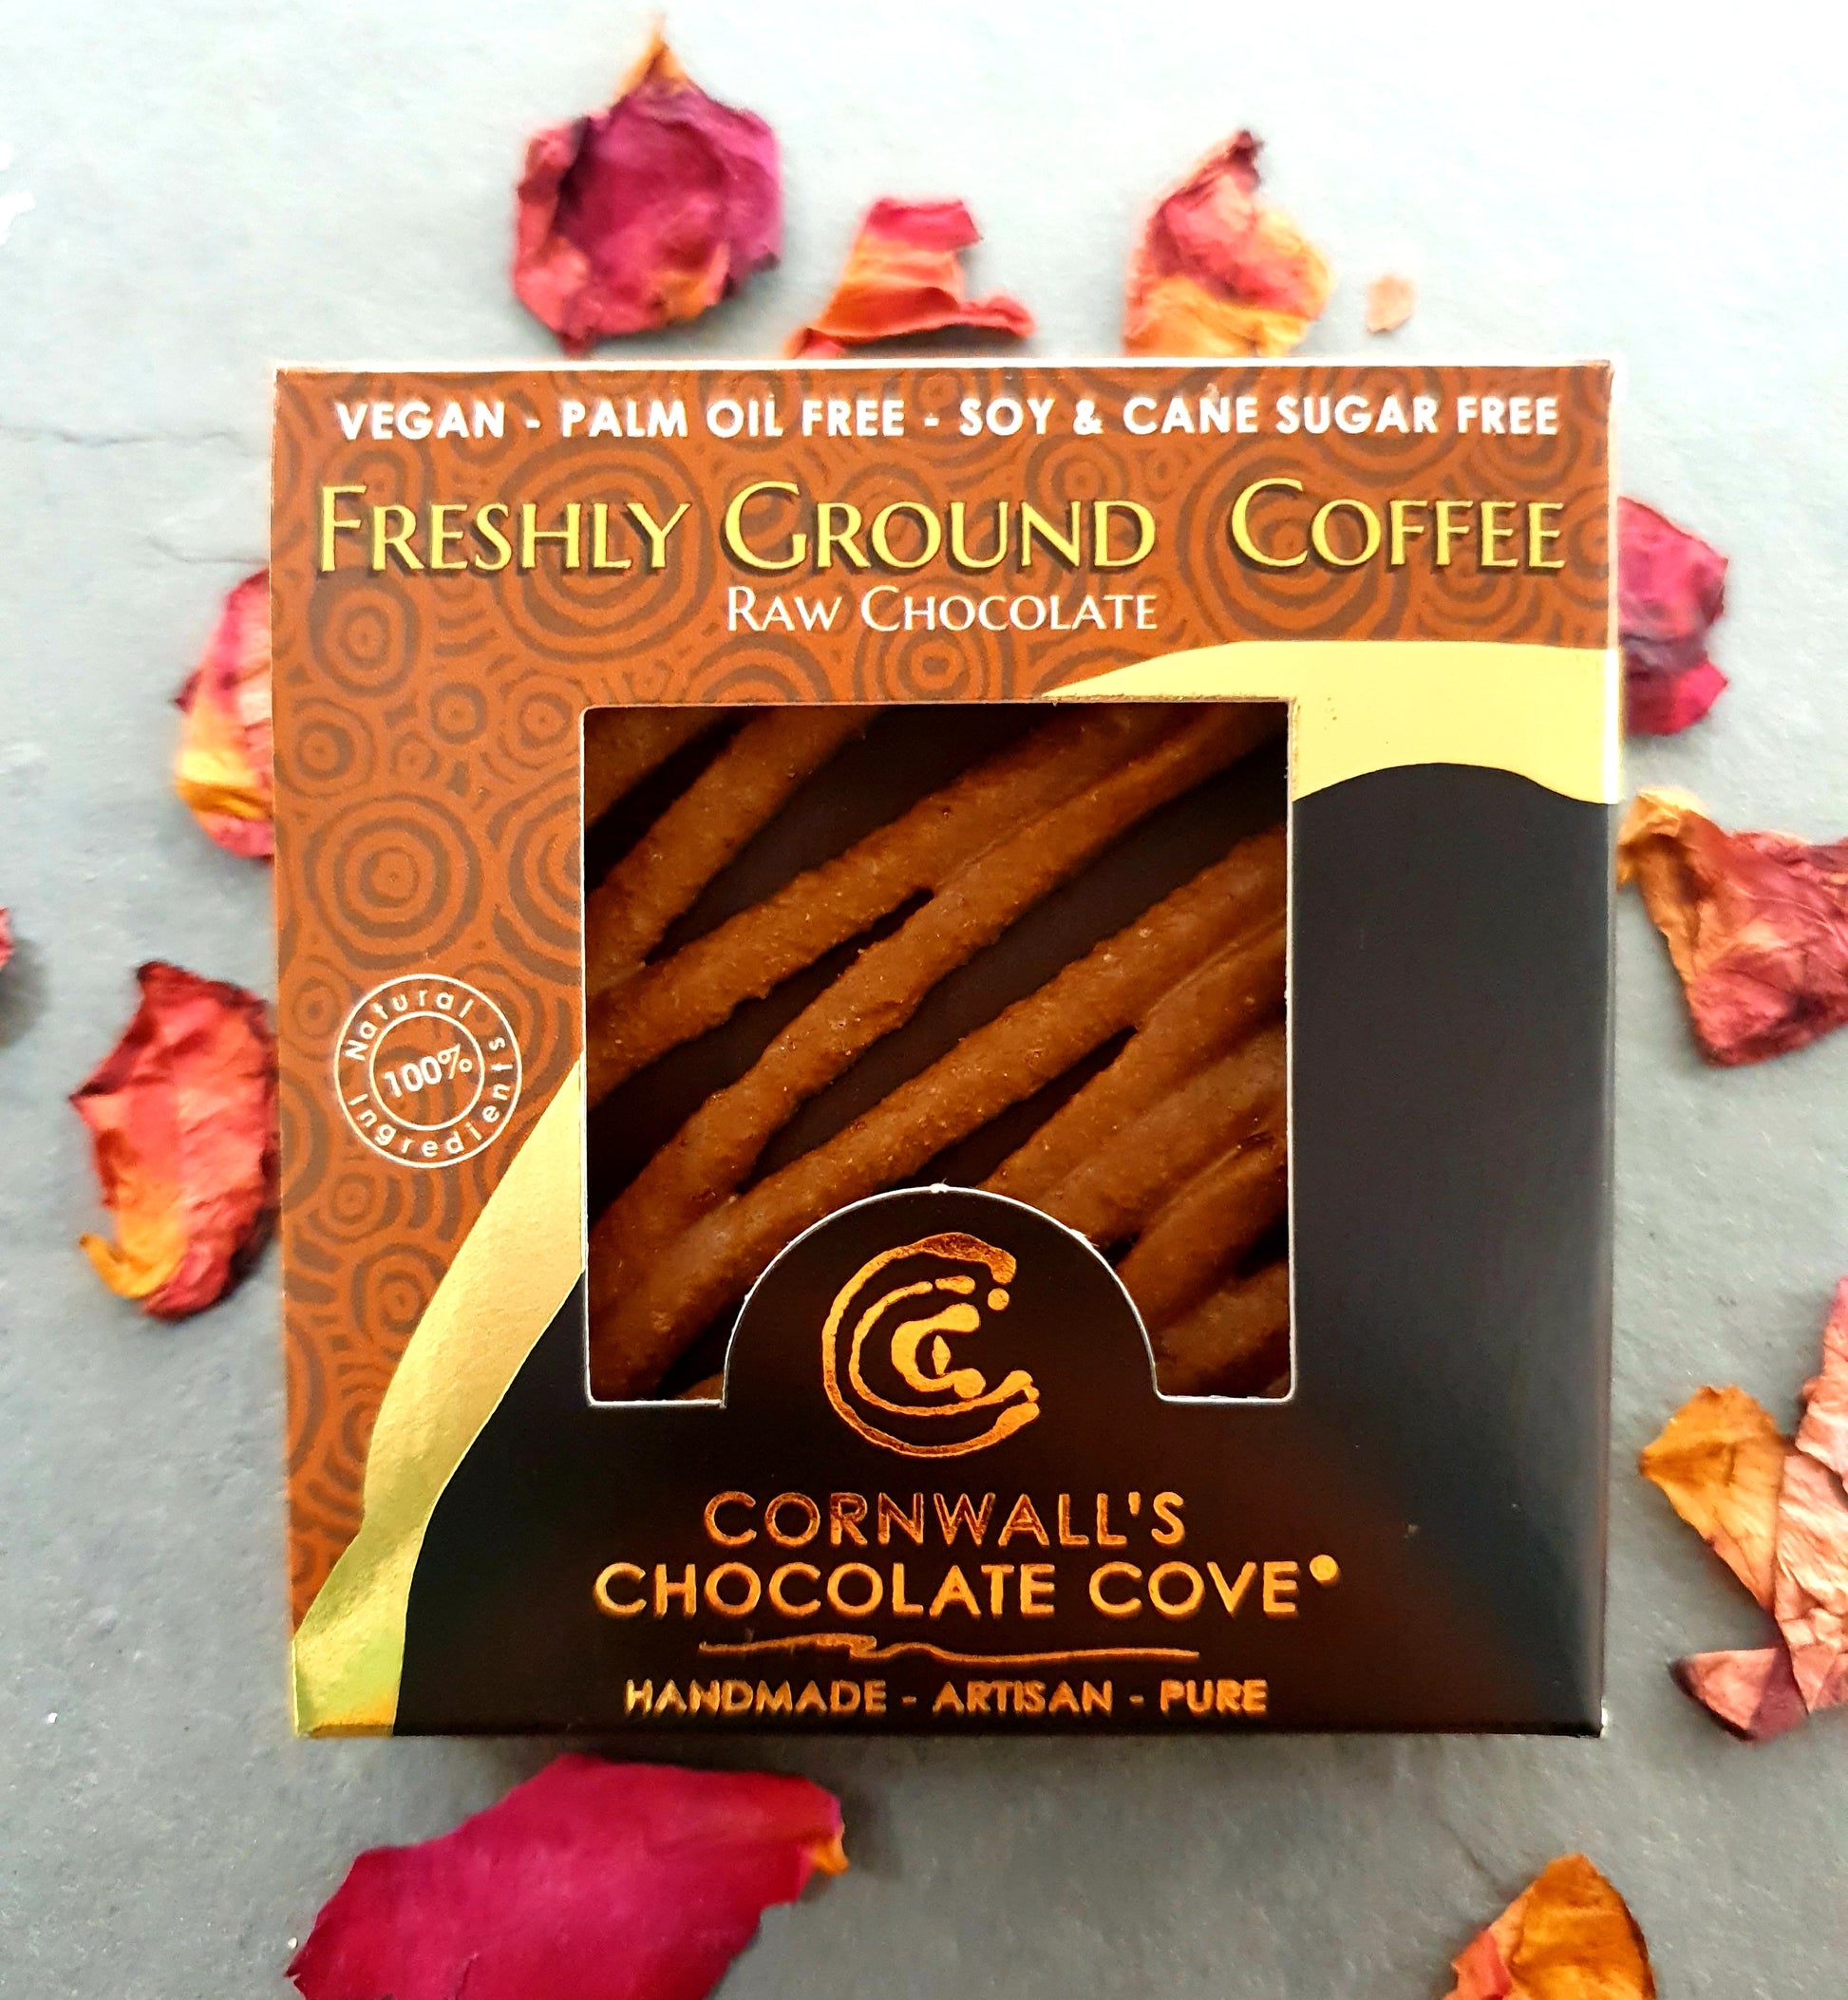 Cornwall's Chocolate Cove plant based, soya, palm oil, cane sugar and gluten free organic raw chocolate. Freshly Ground Coffee